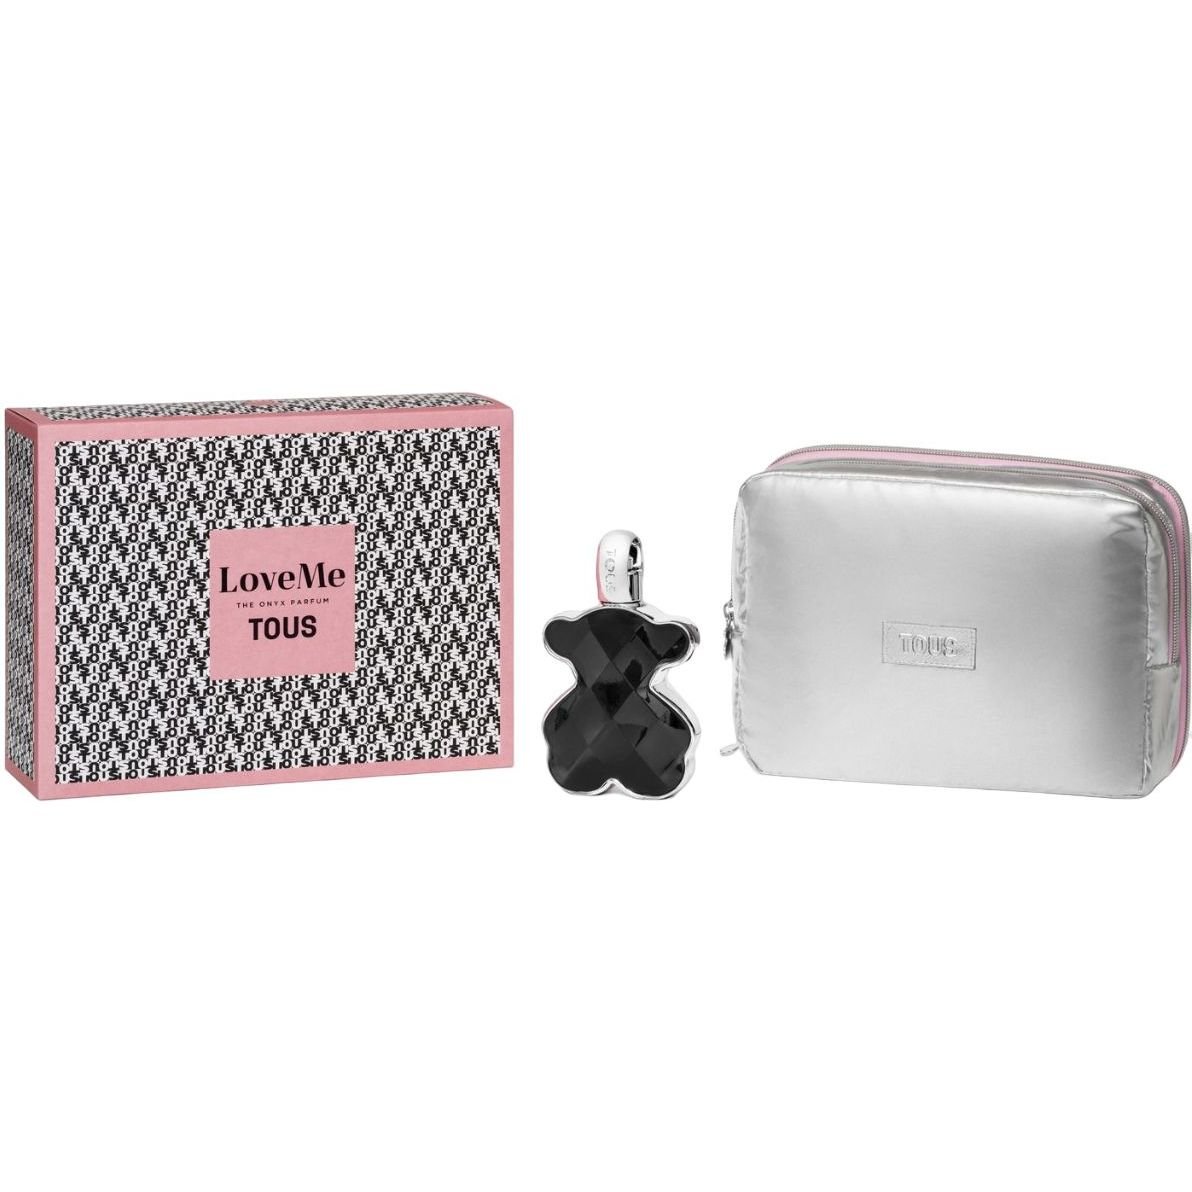 Подарочный набор для женщин Tous LoveMe The Onyx Perfume, 90 мл + косметичка - фото 1